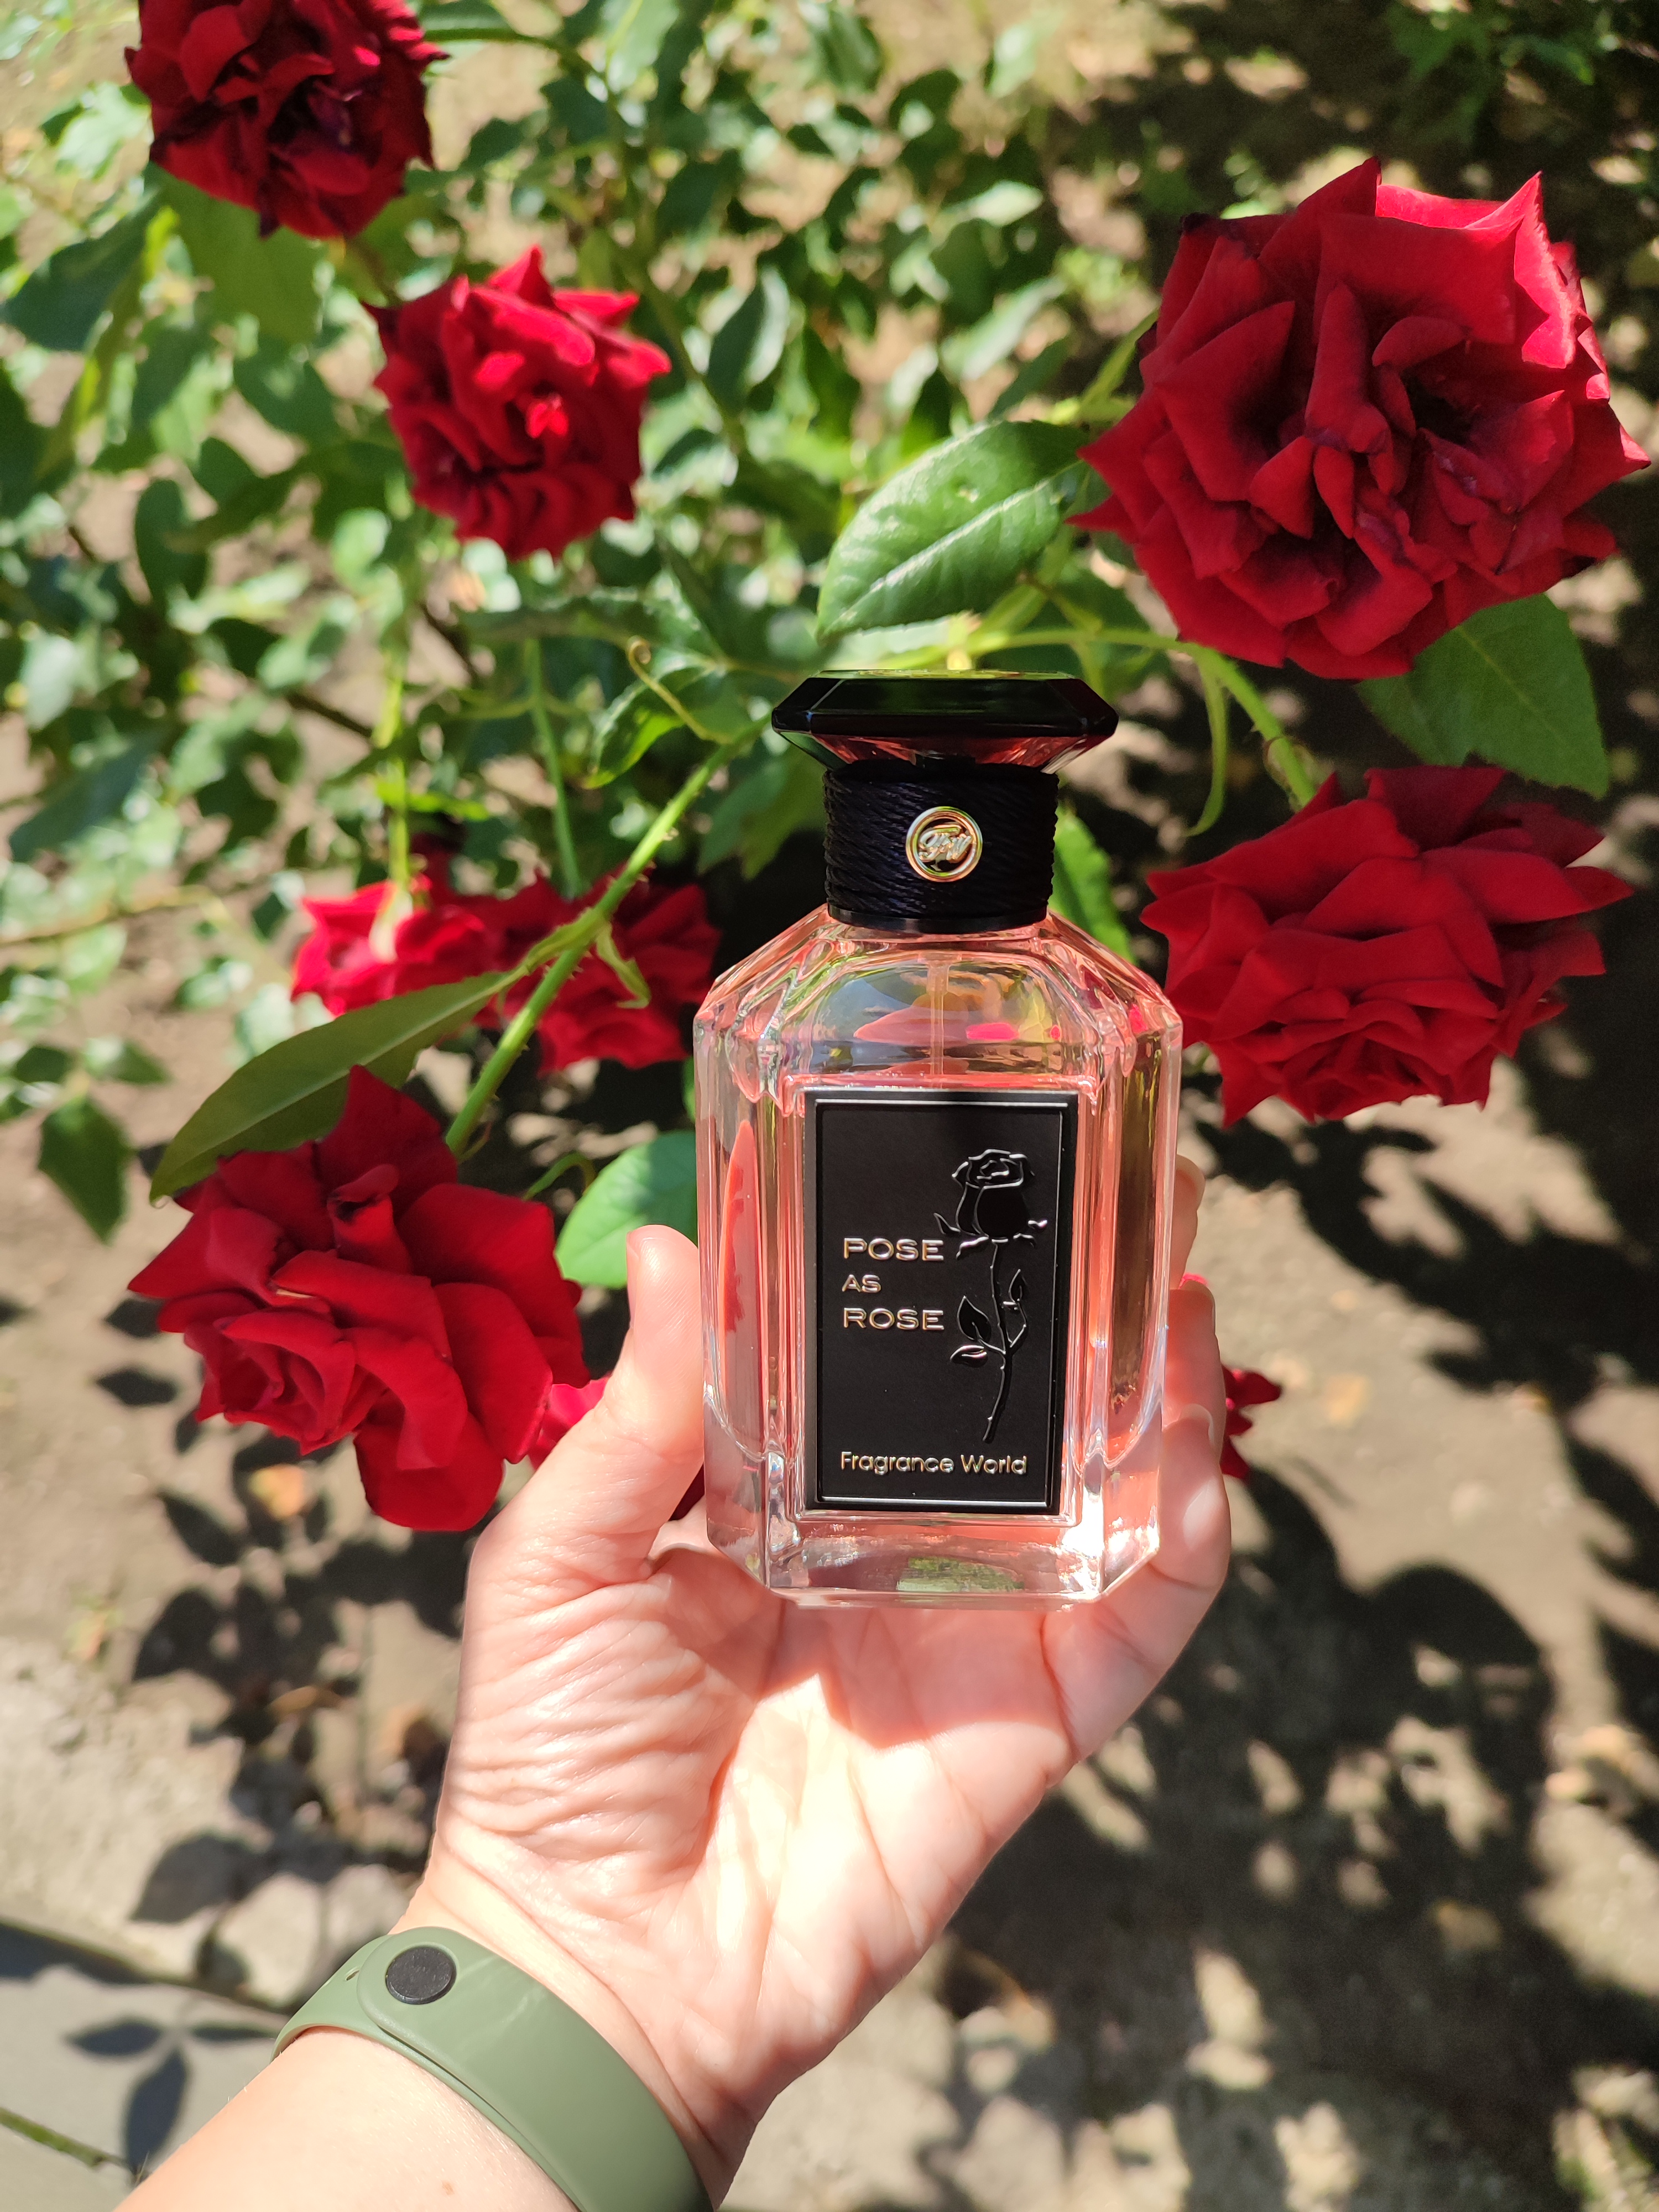 Fragrance World Pose as Rose